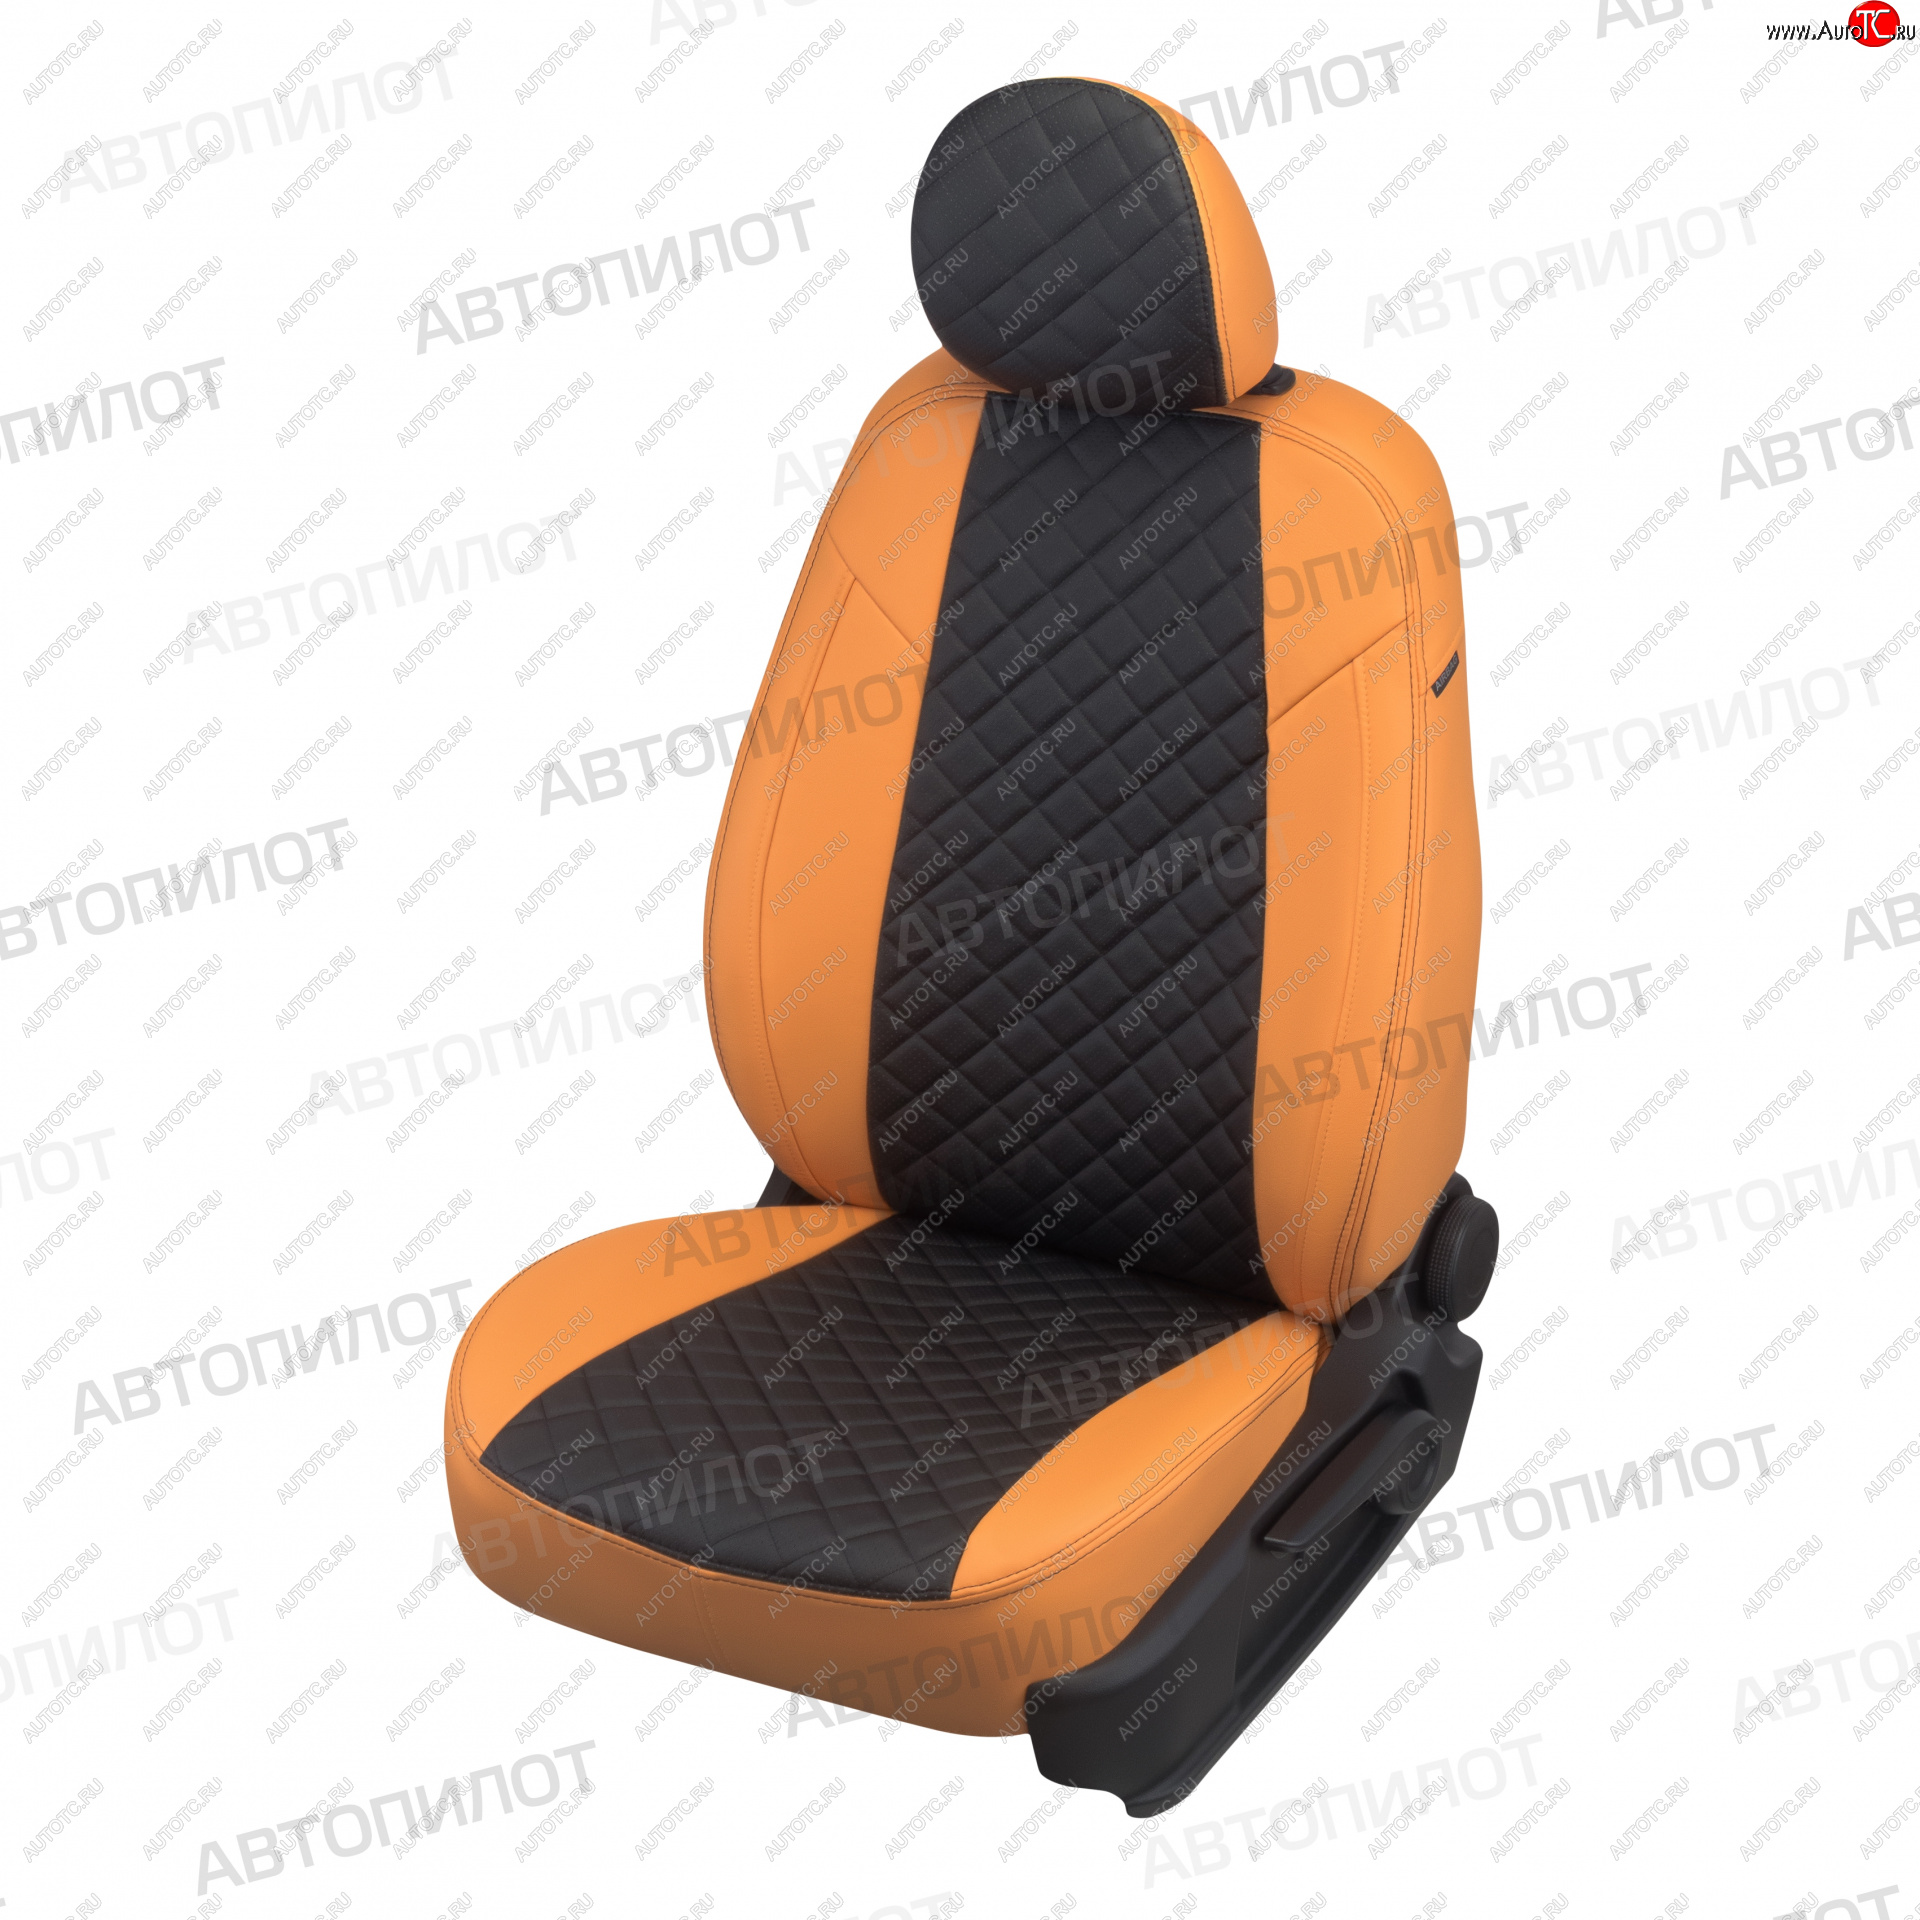 13 999 р. Чехлы сидений (экокожа) Автопилот Ромб  KIA Rio  2 JB (2005-2011) (оранж/черный)